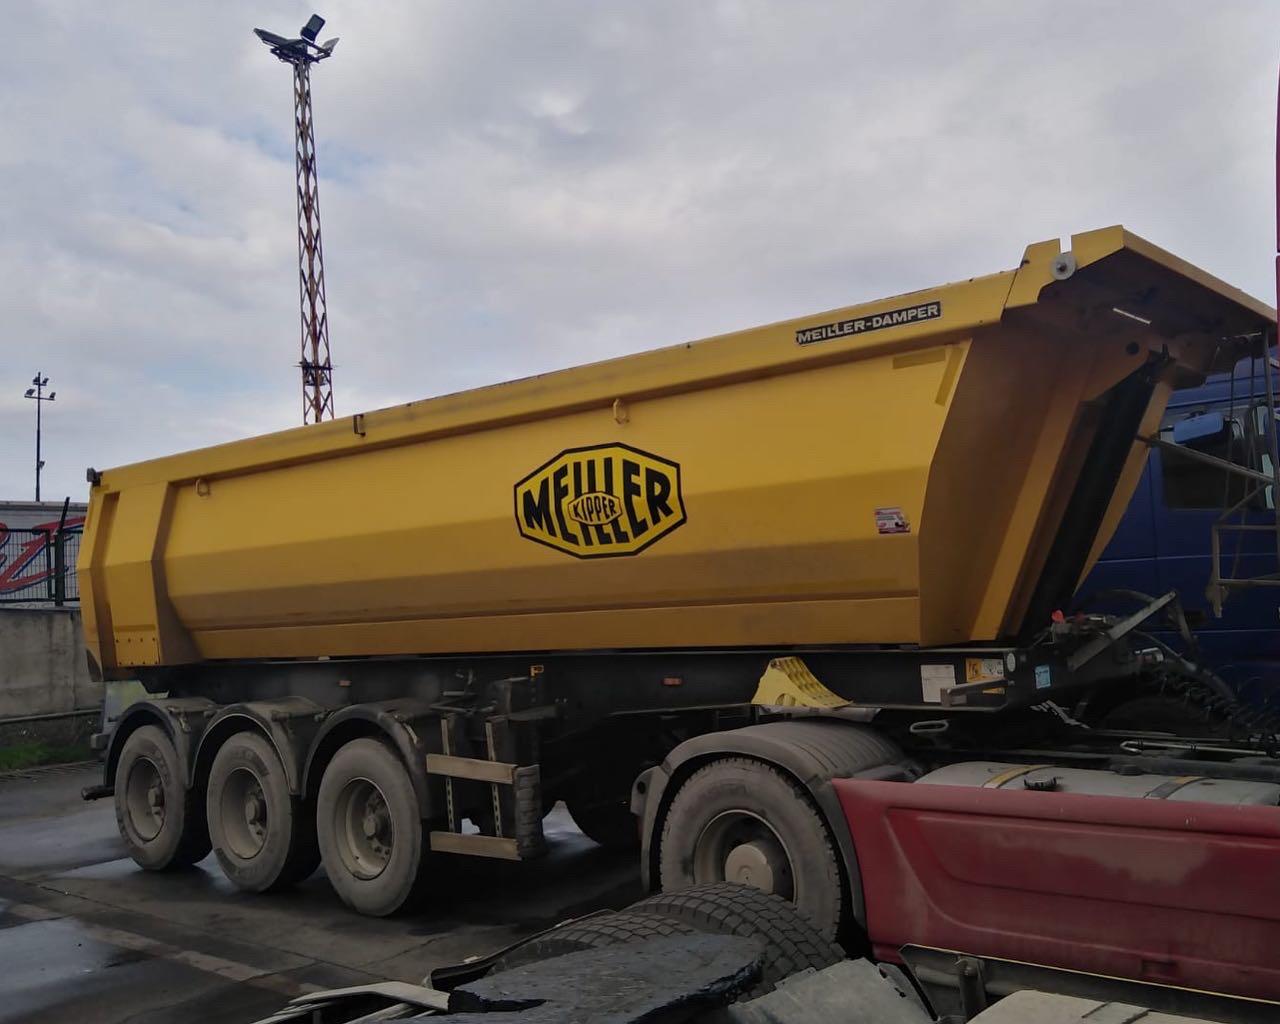 Export of 2014 model “MEILLER” brand tipper semi-trailer